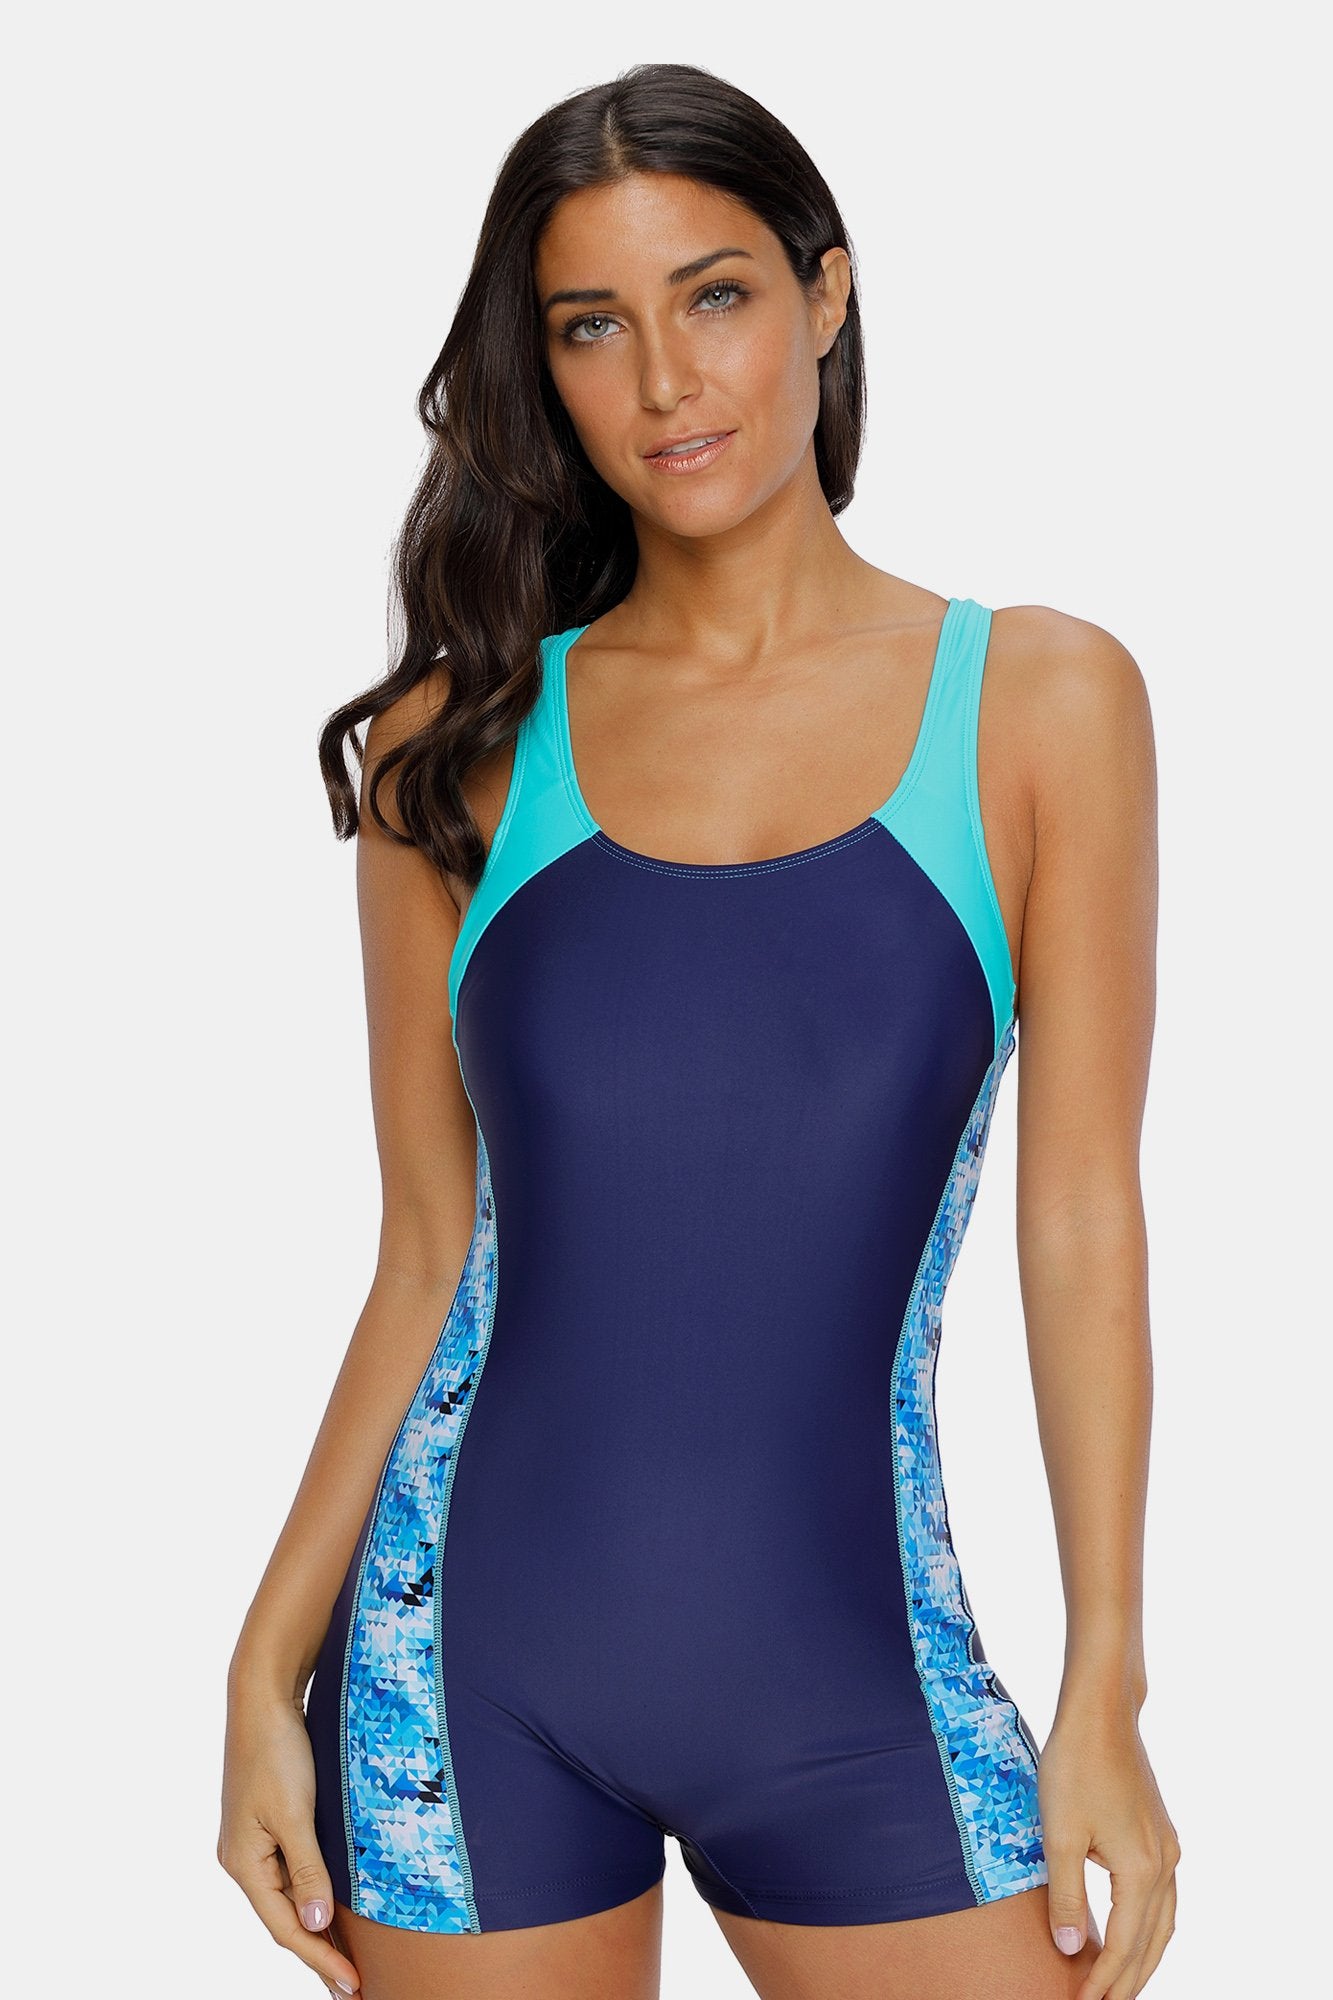 ACCLAIM Pisa Ladies Girls Racer Back Shelf Bra Swimming Costume Swim Suit